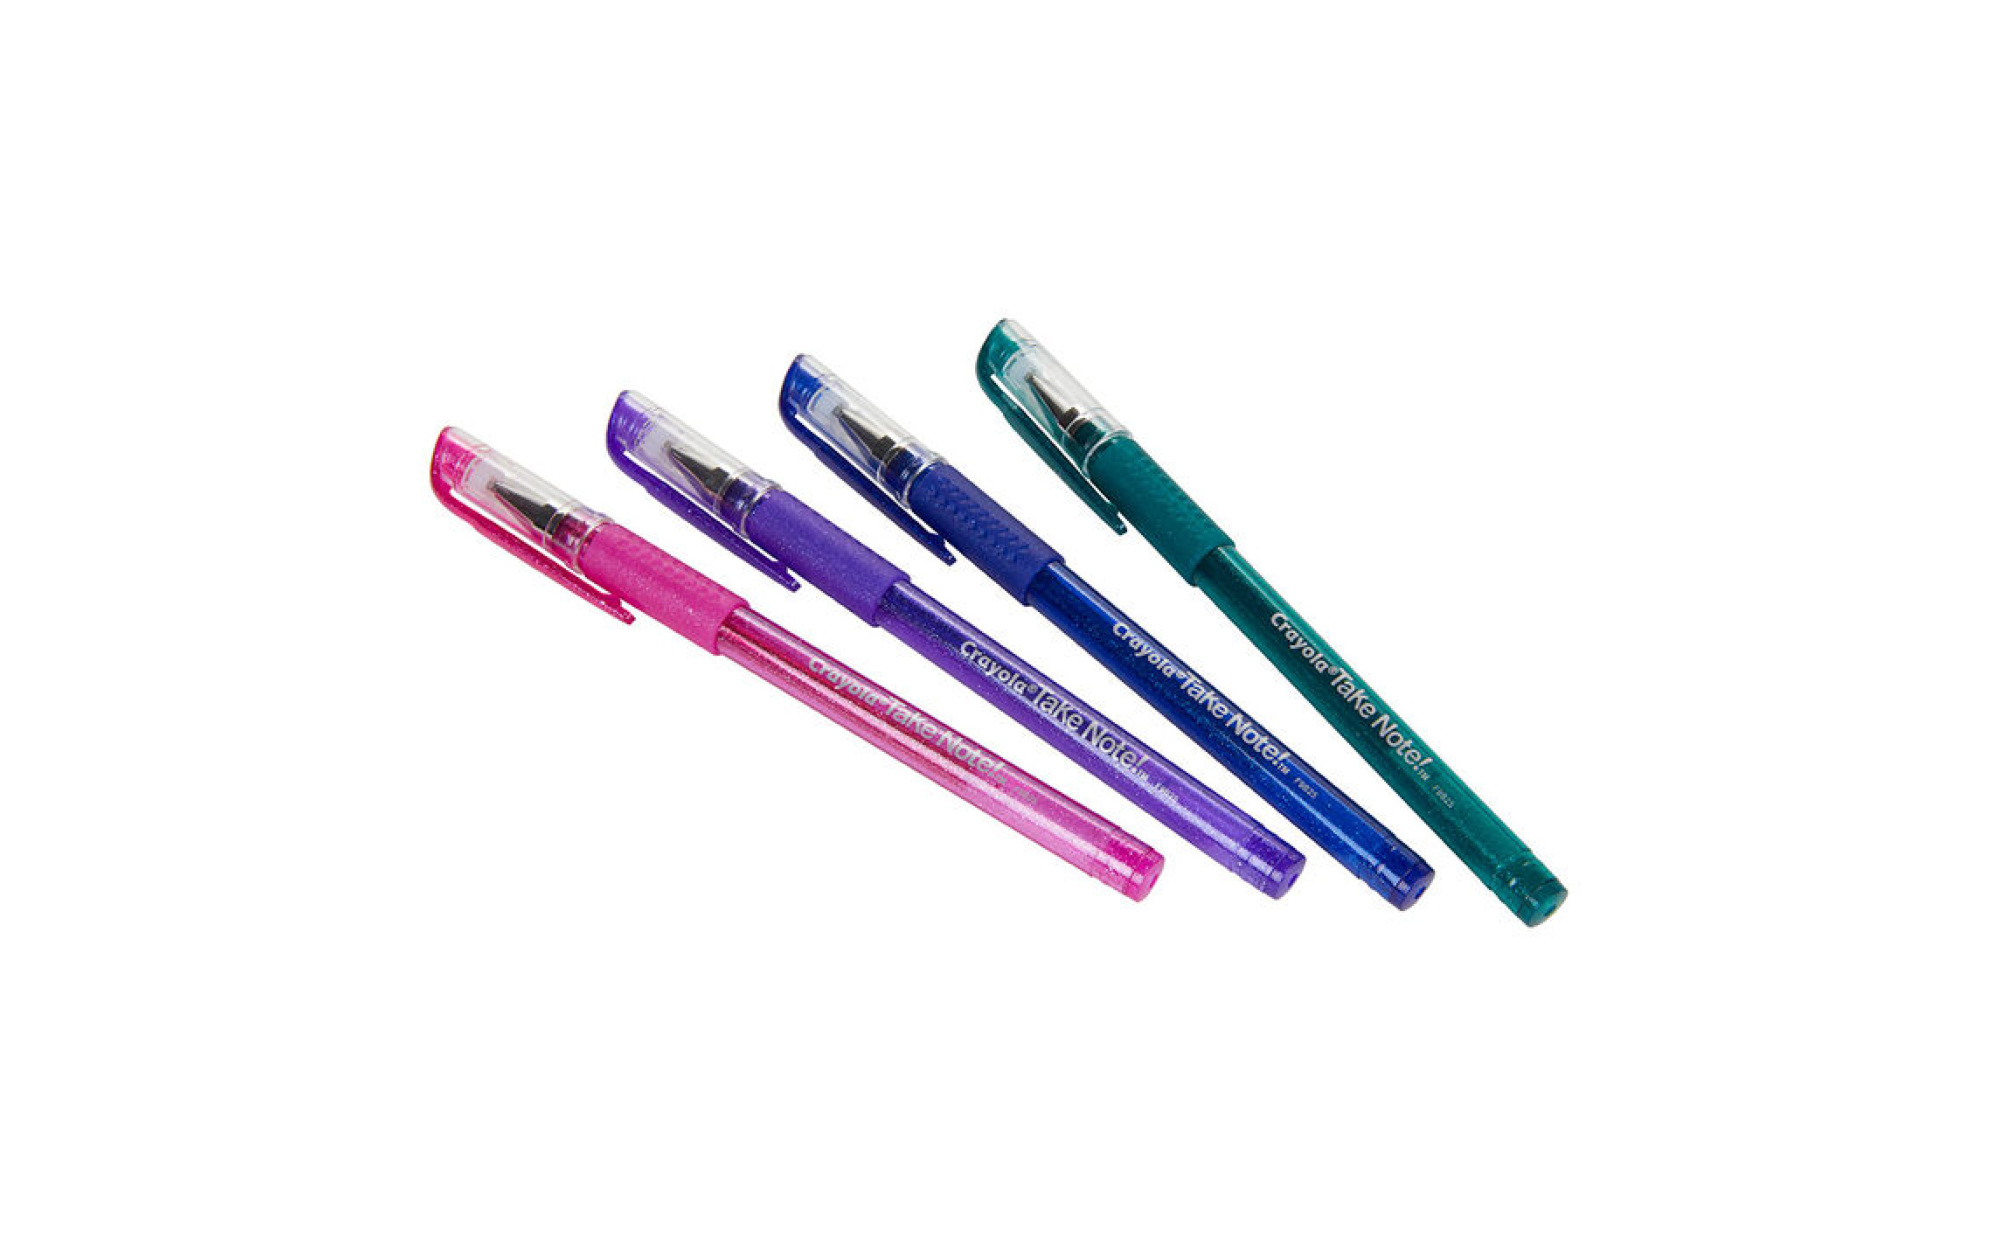 Crayola Take Note! Washable Gel Pens, 14 Per Pack, 2 Packs